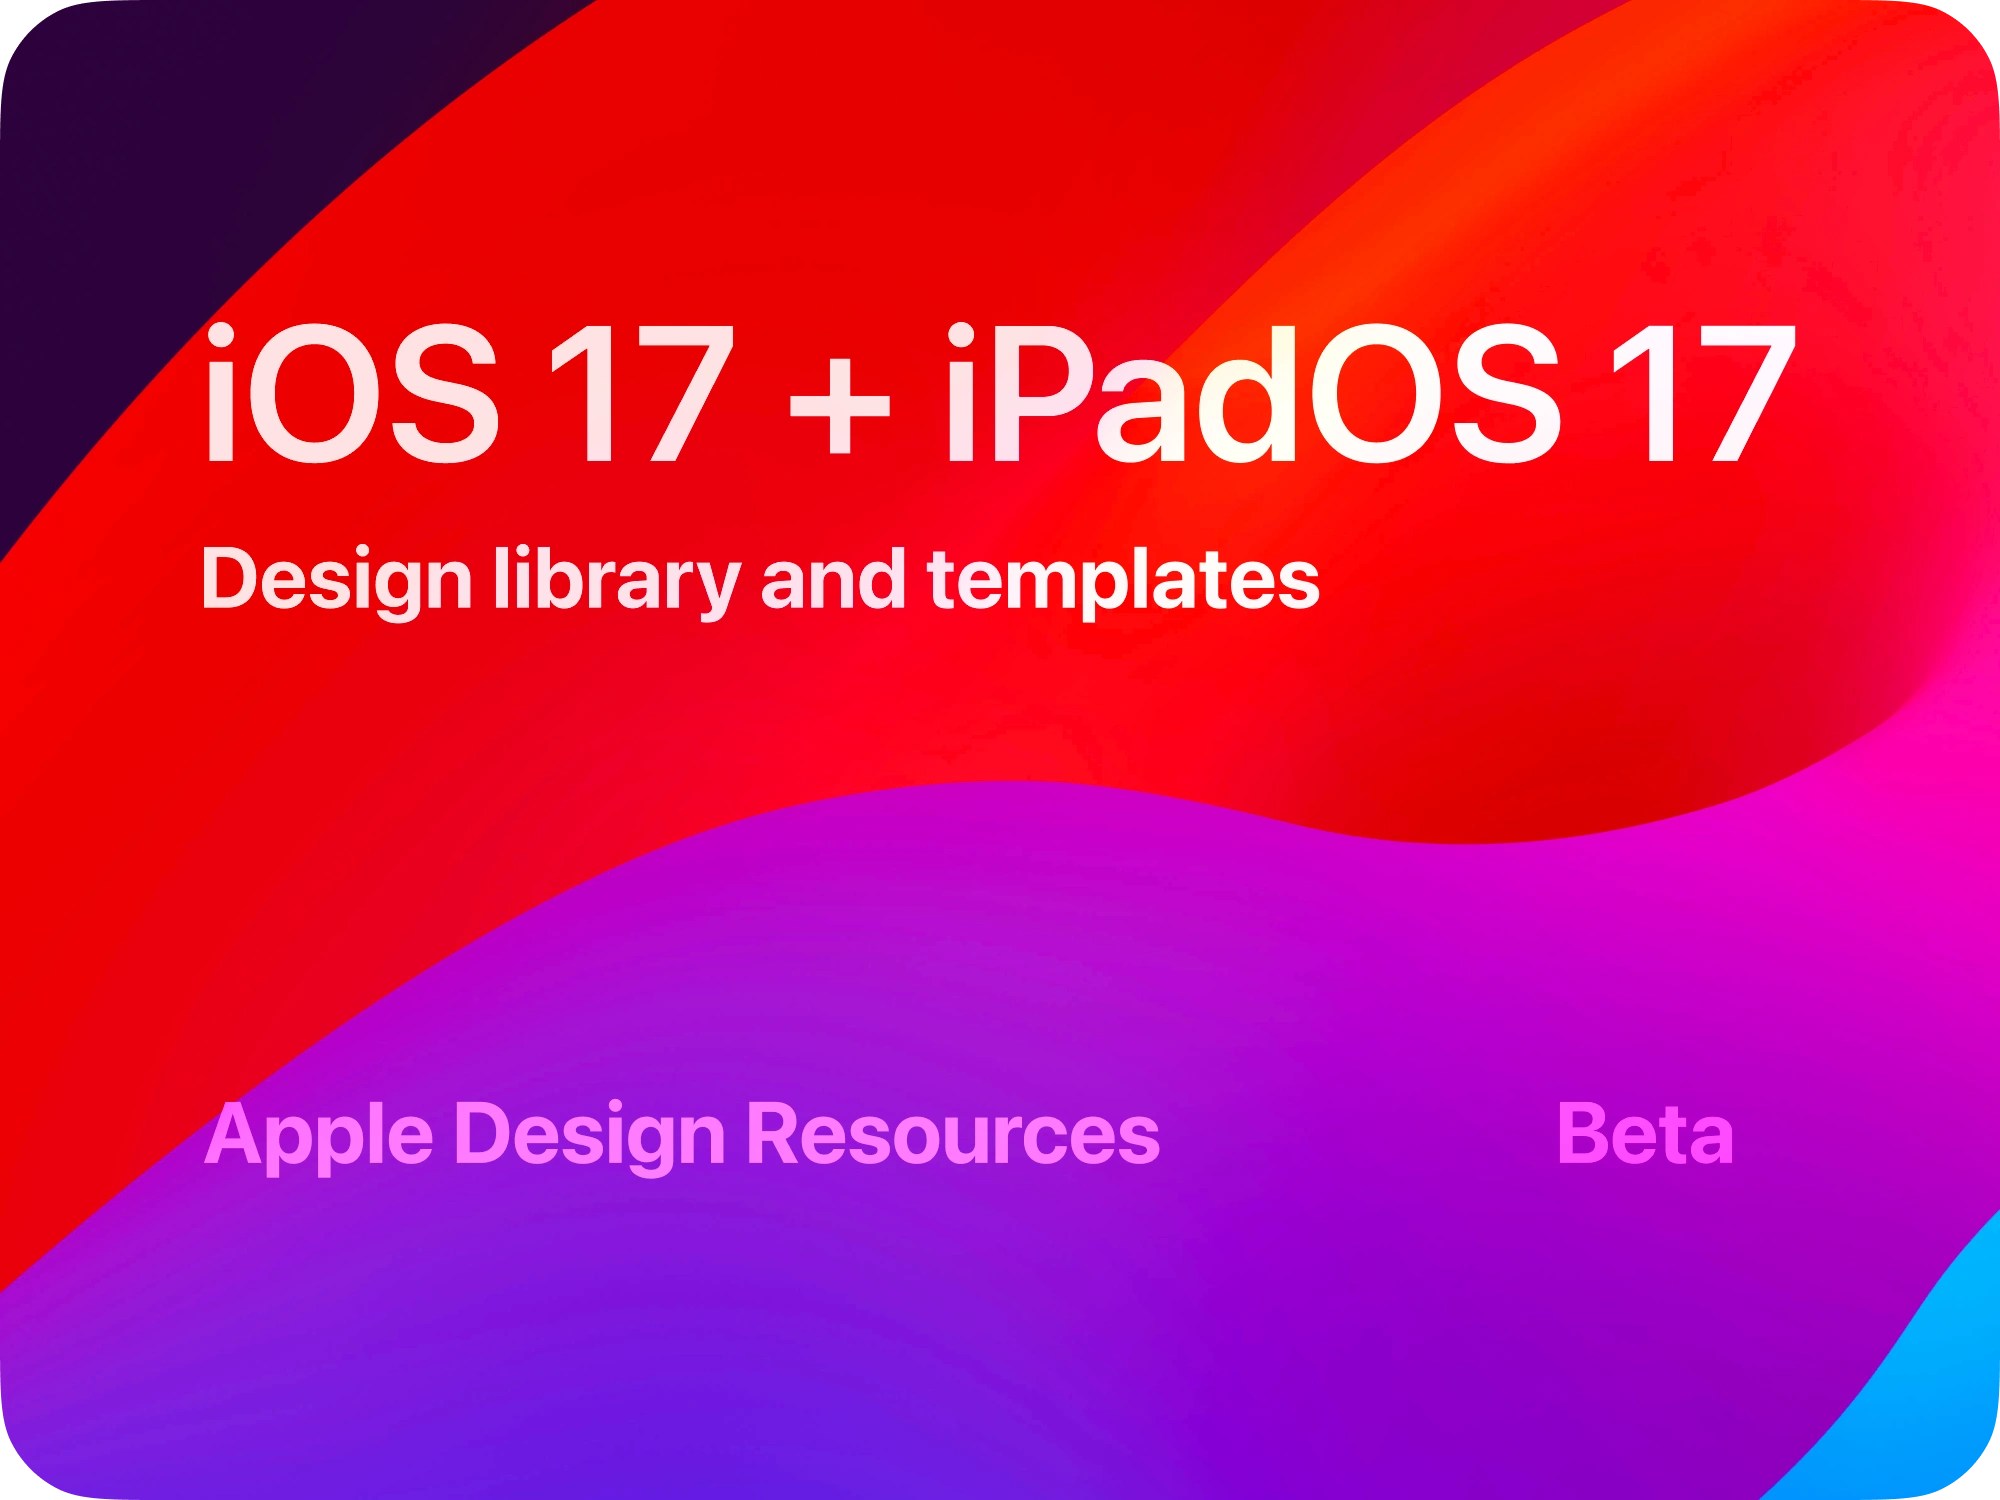 Apple Design Resources: iOS 17 and iPadOS 17